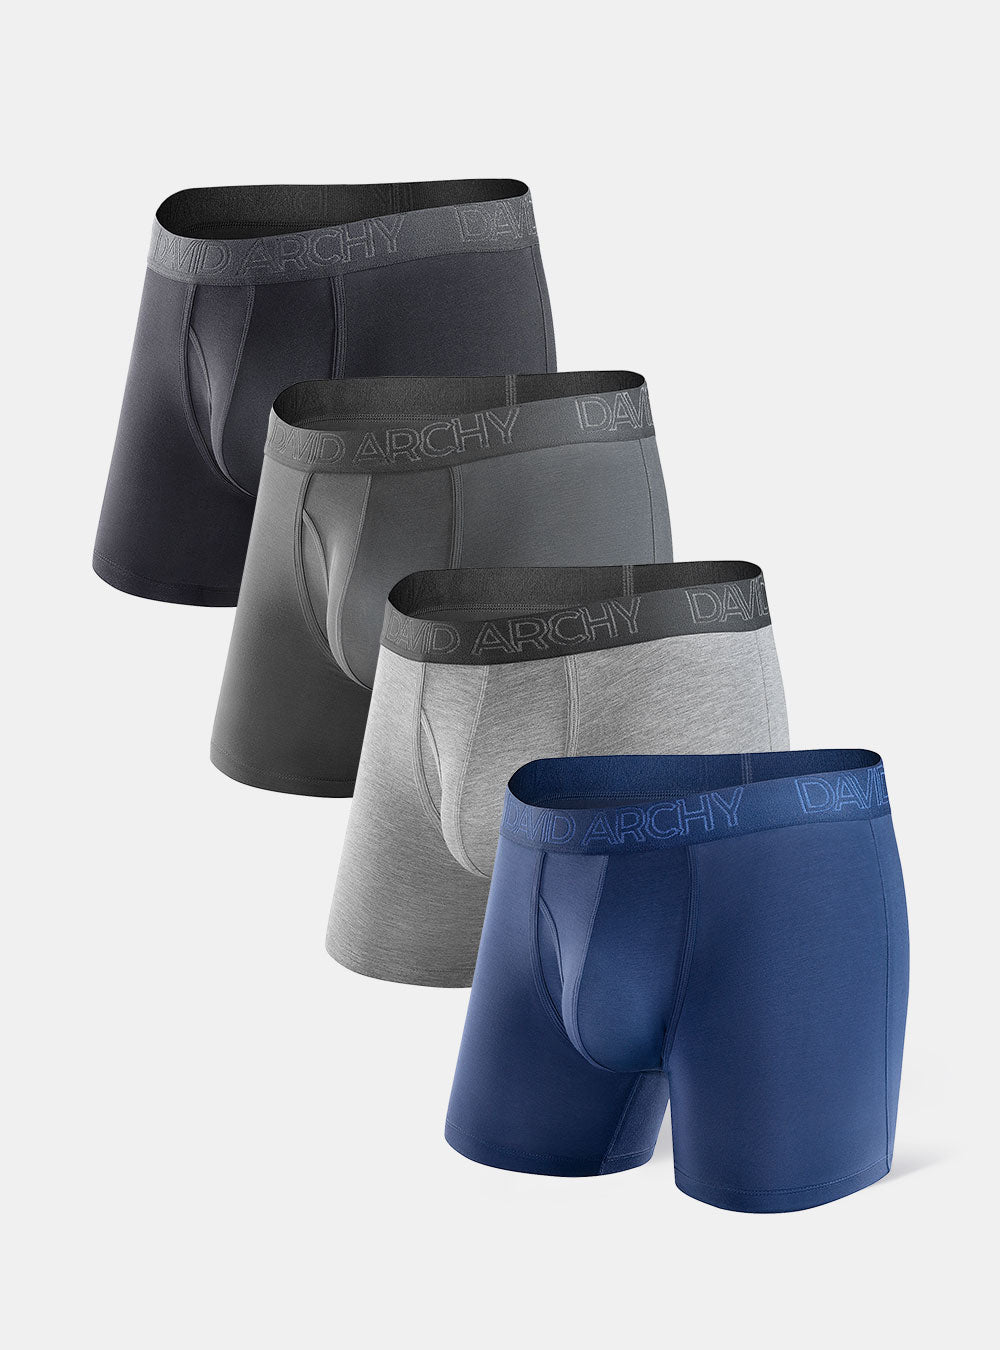 David Archy, Underwear & Socks, David Archy Dual Pouch Trunk Underwear 2  Pack